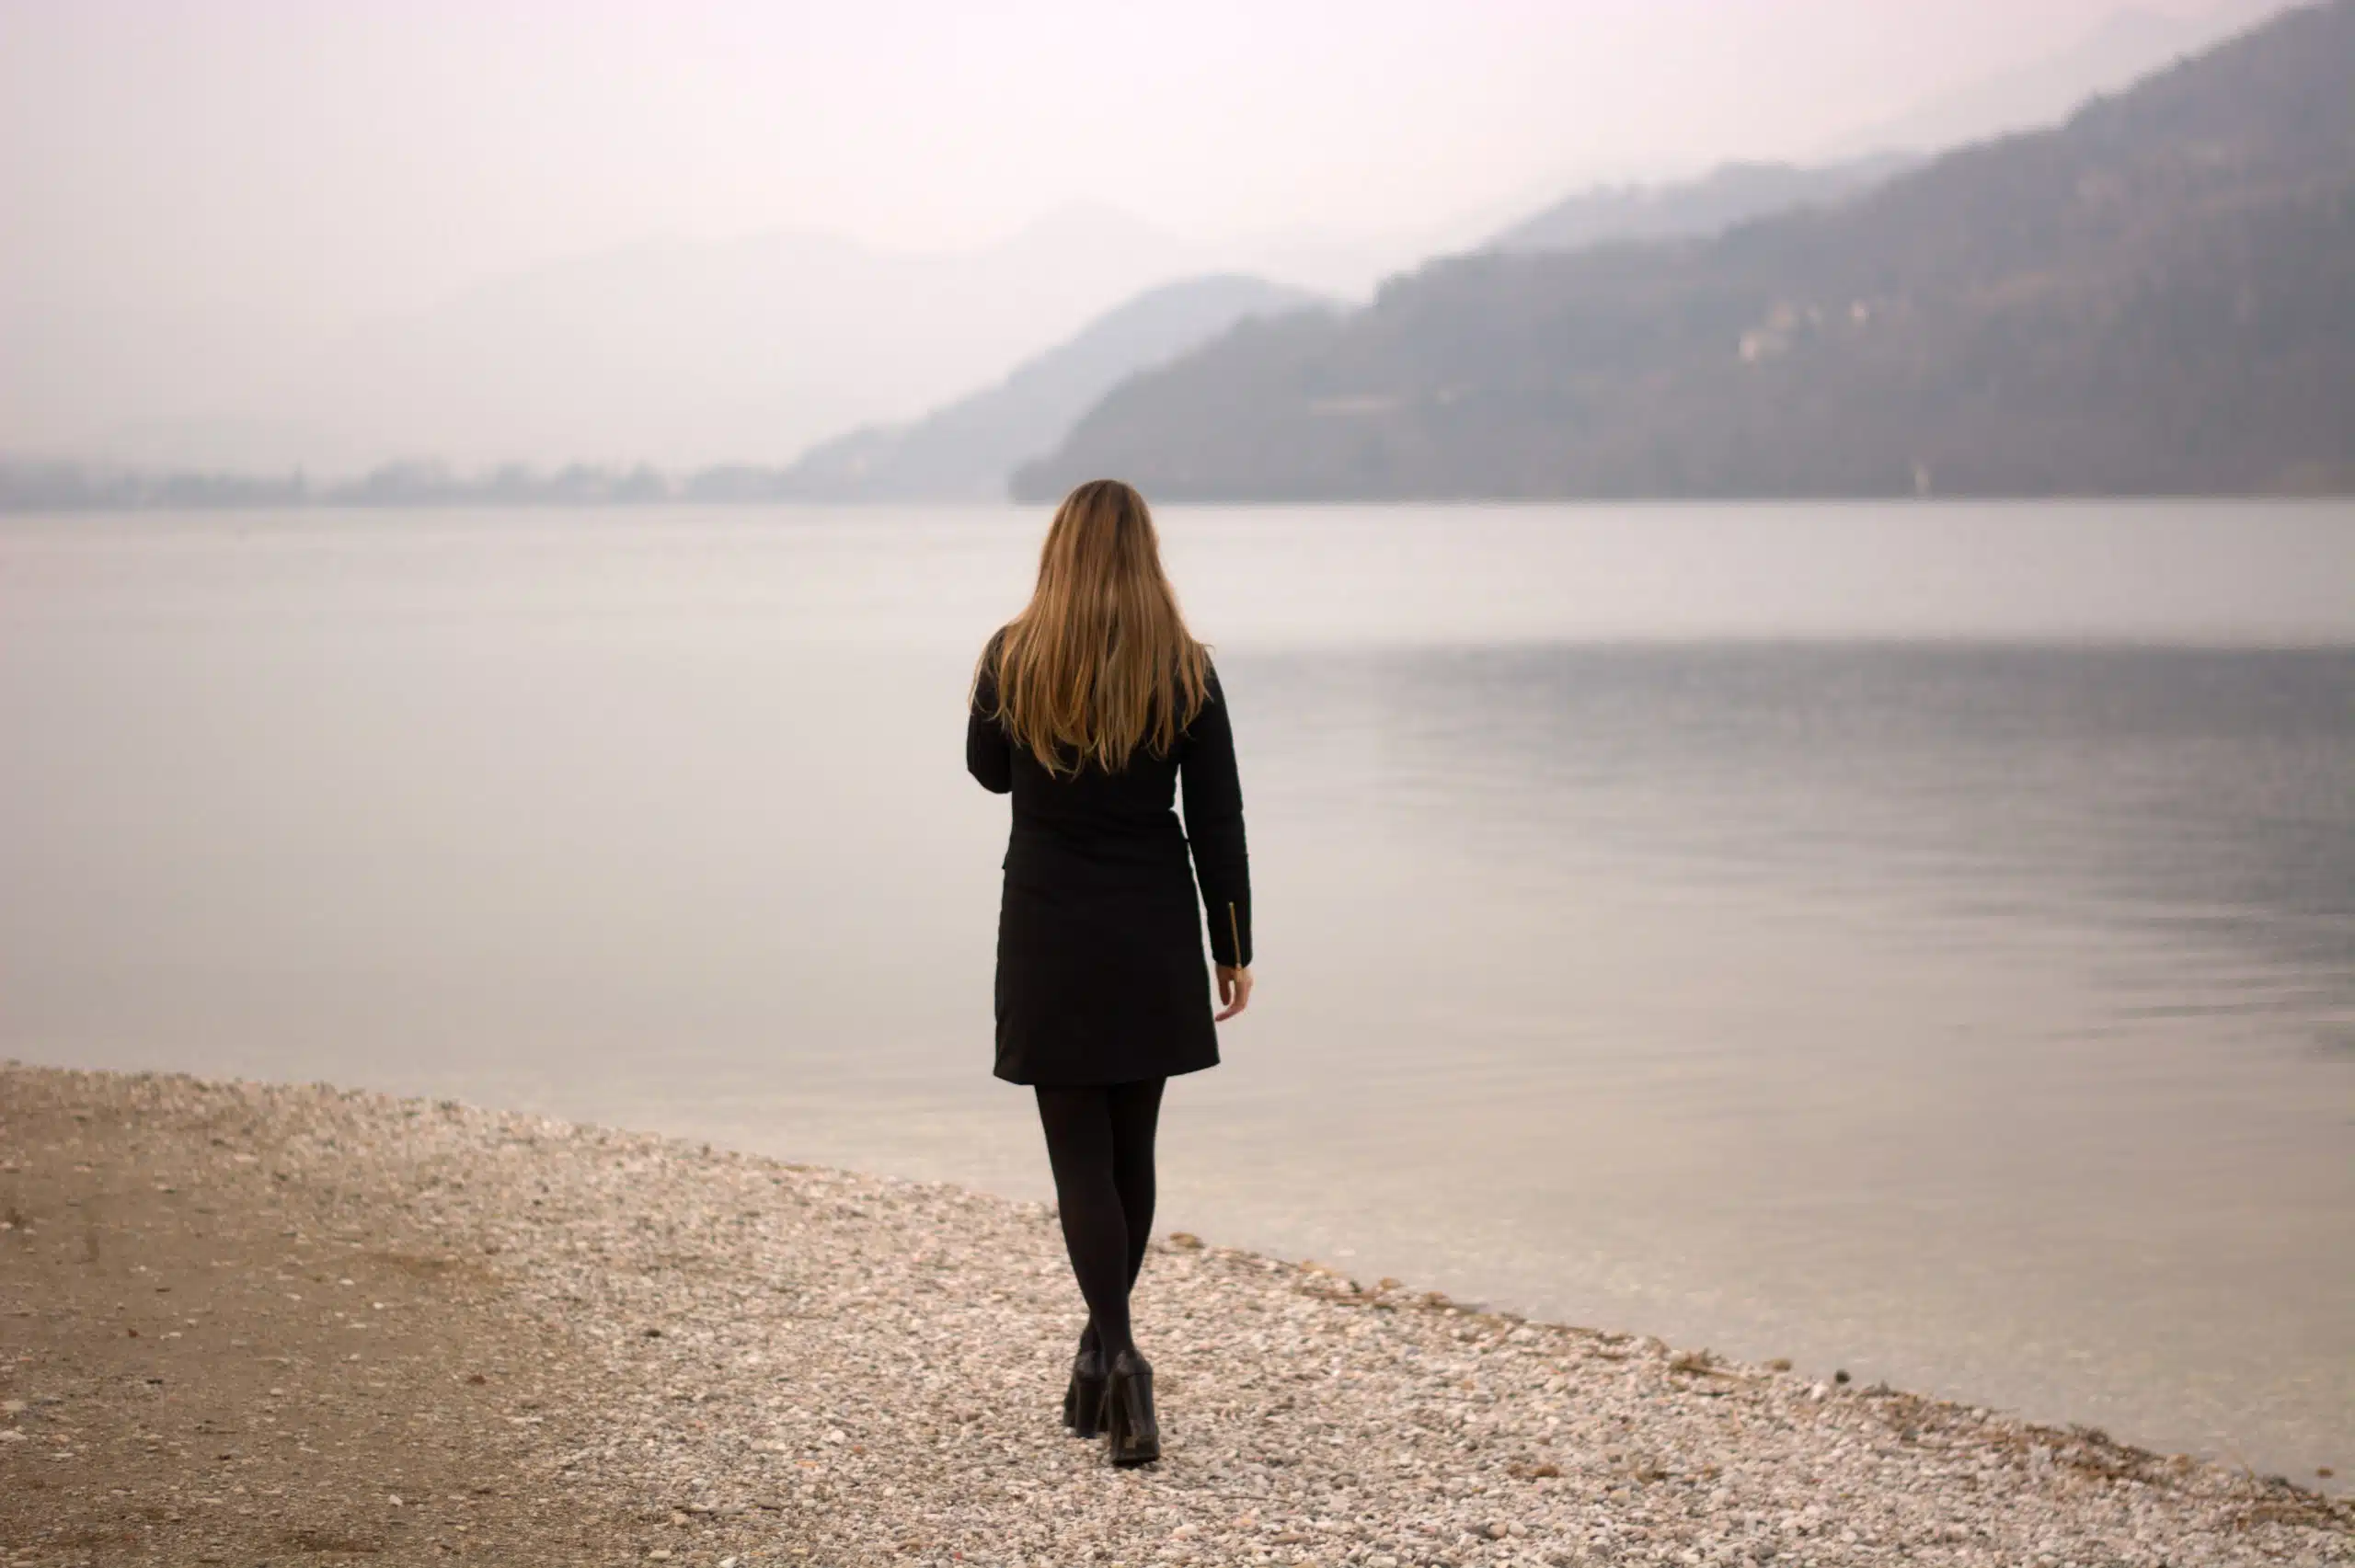 Melancholic woman in black walking alone by the foggy lake.